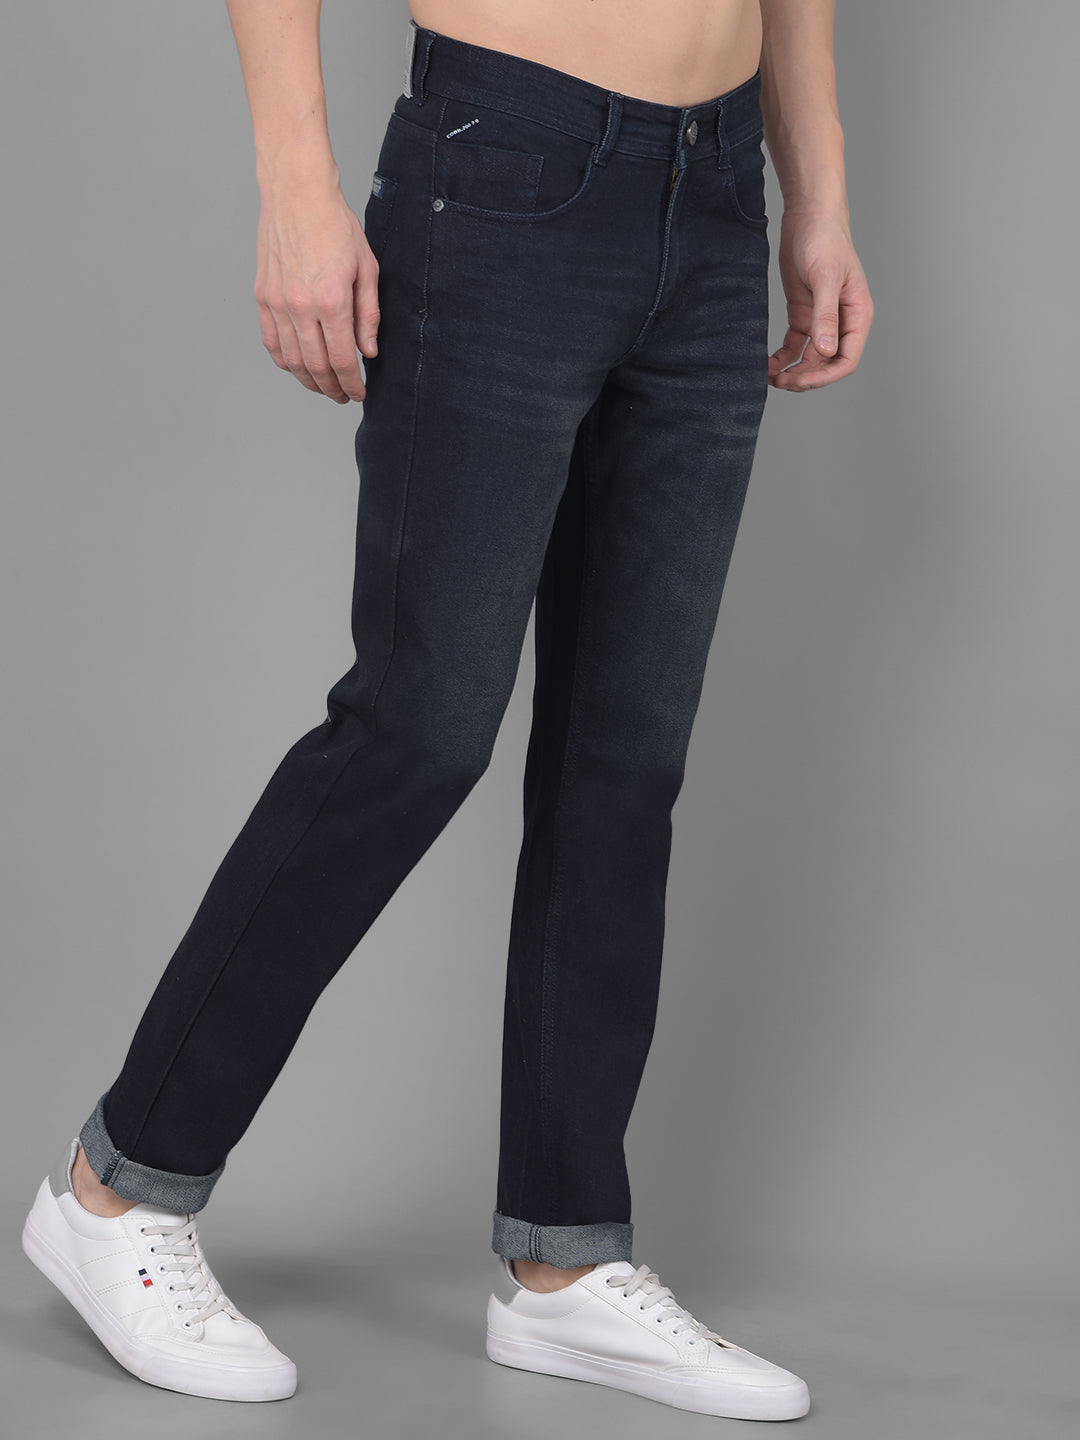 cobb navy blue narrow fit jeans